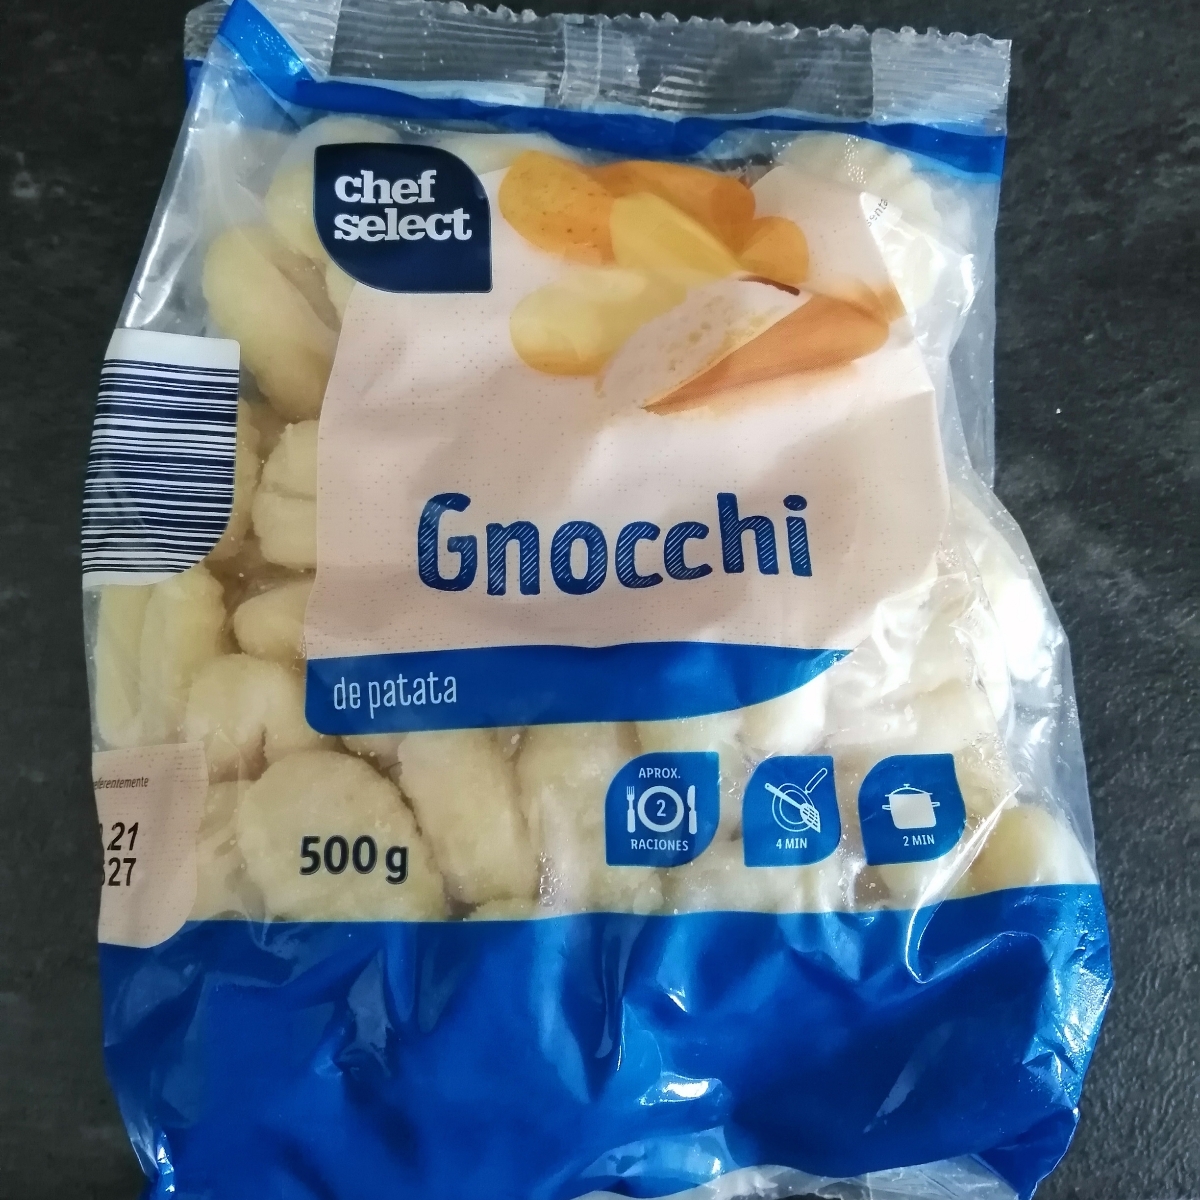 Chef Select Gnocchi Review | abillion